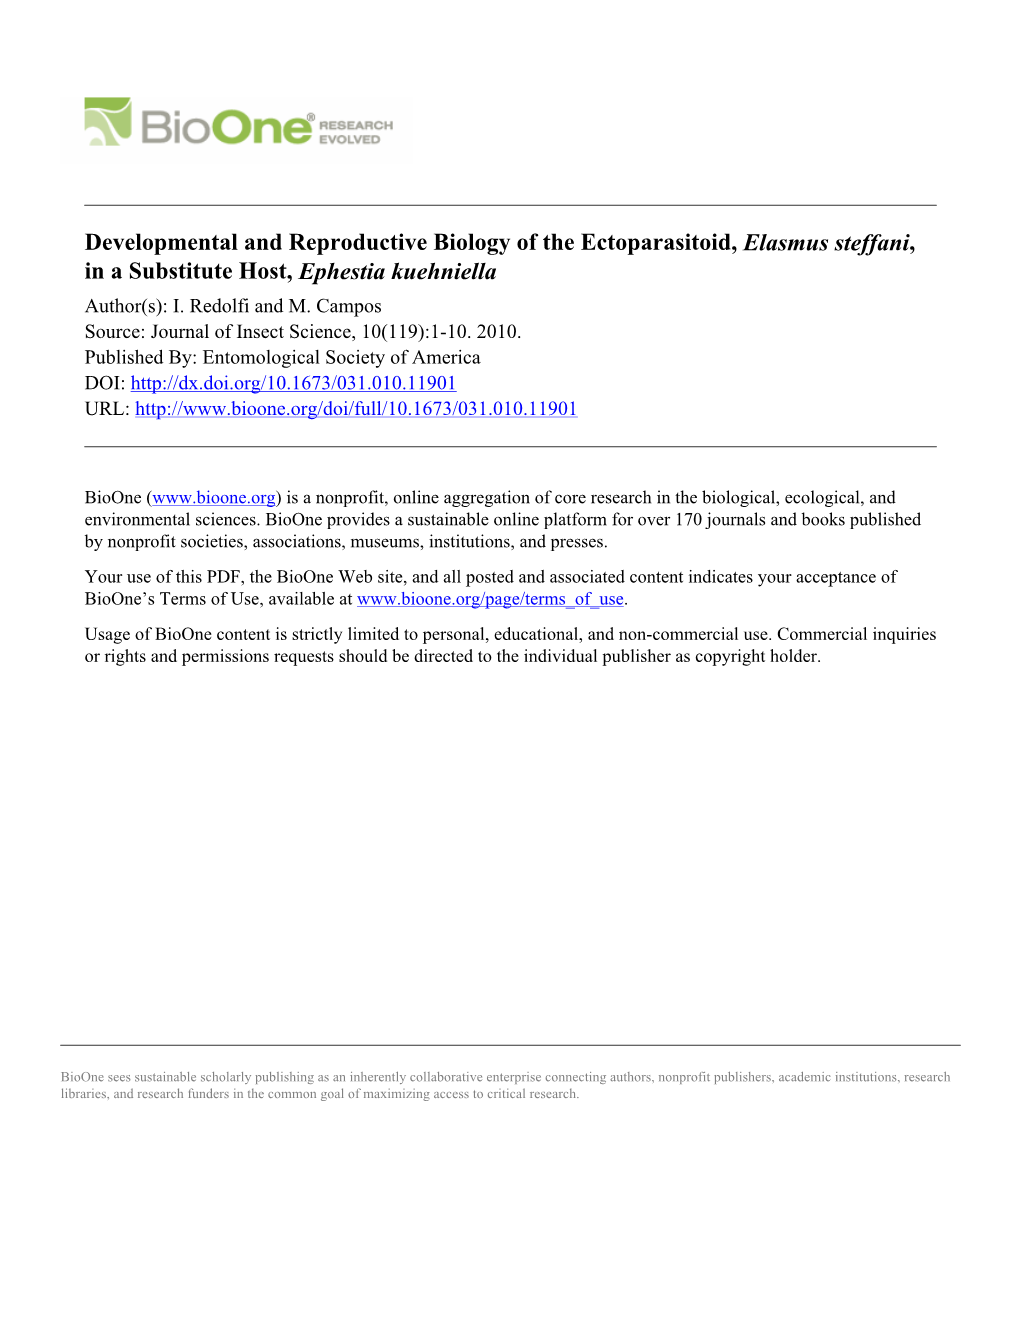 Developmental and Reproductive Biology of the Ectoparasitoid, Elasmus Steffani, in a Substitute Host, Ephestia Kuehniella Author(S): I